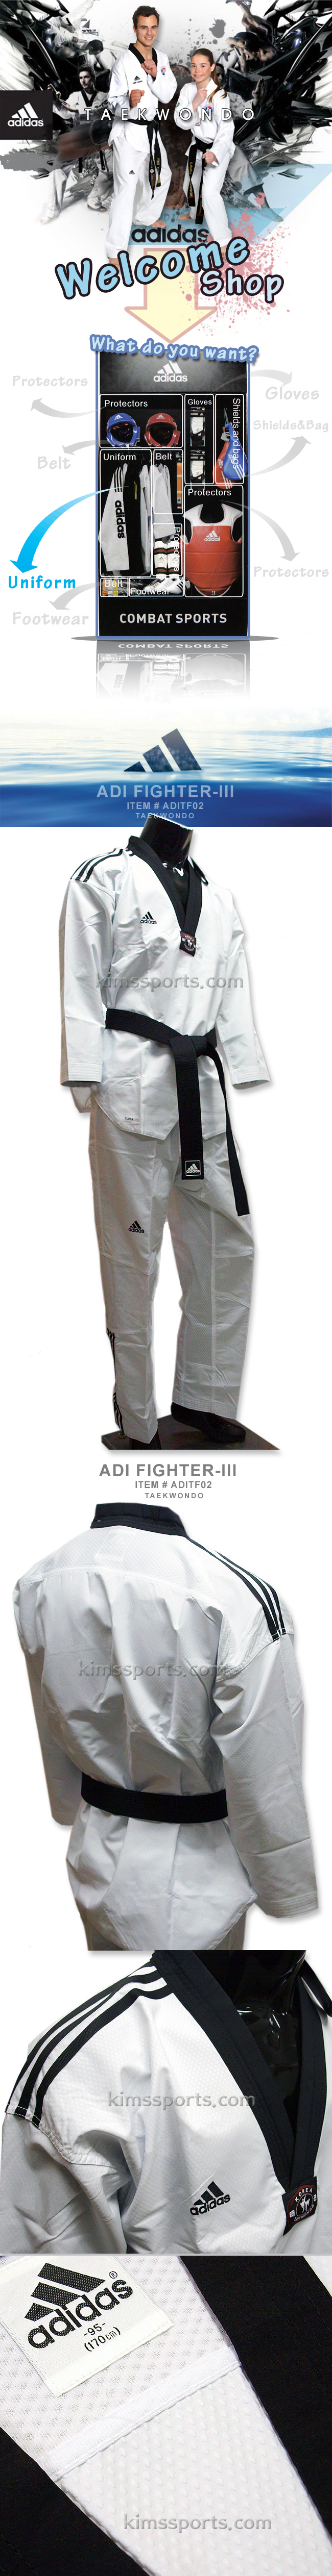 adidas ADI-FIGHTER New Taekwondo Uniform